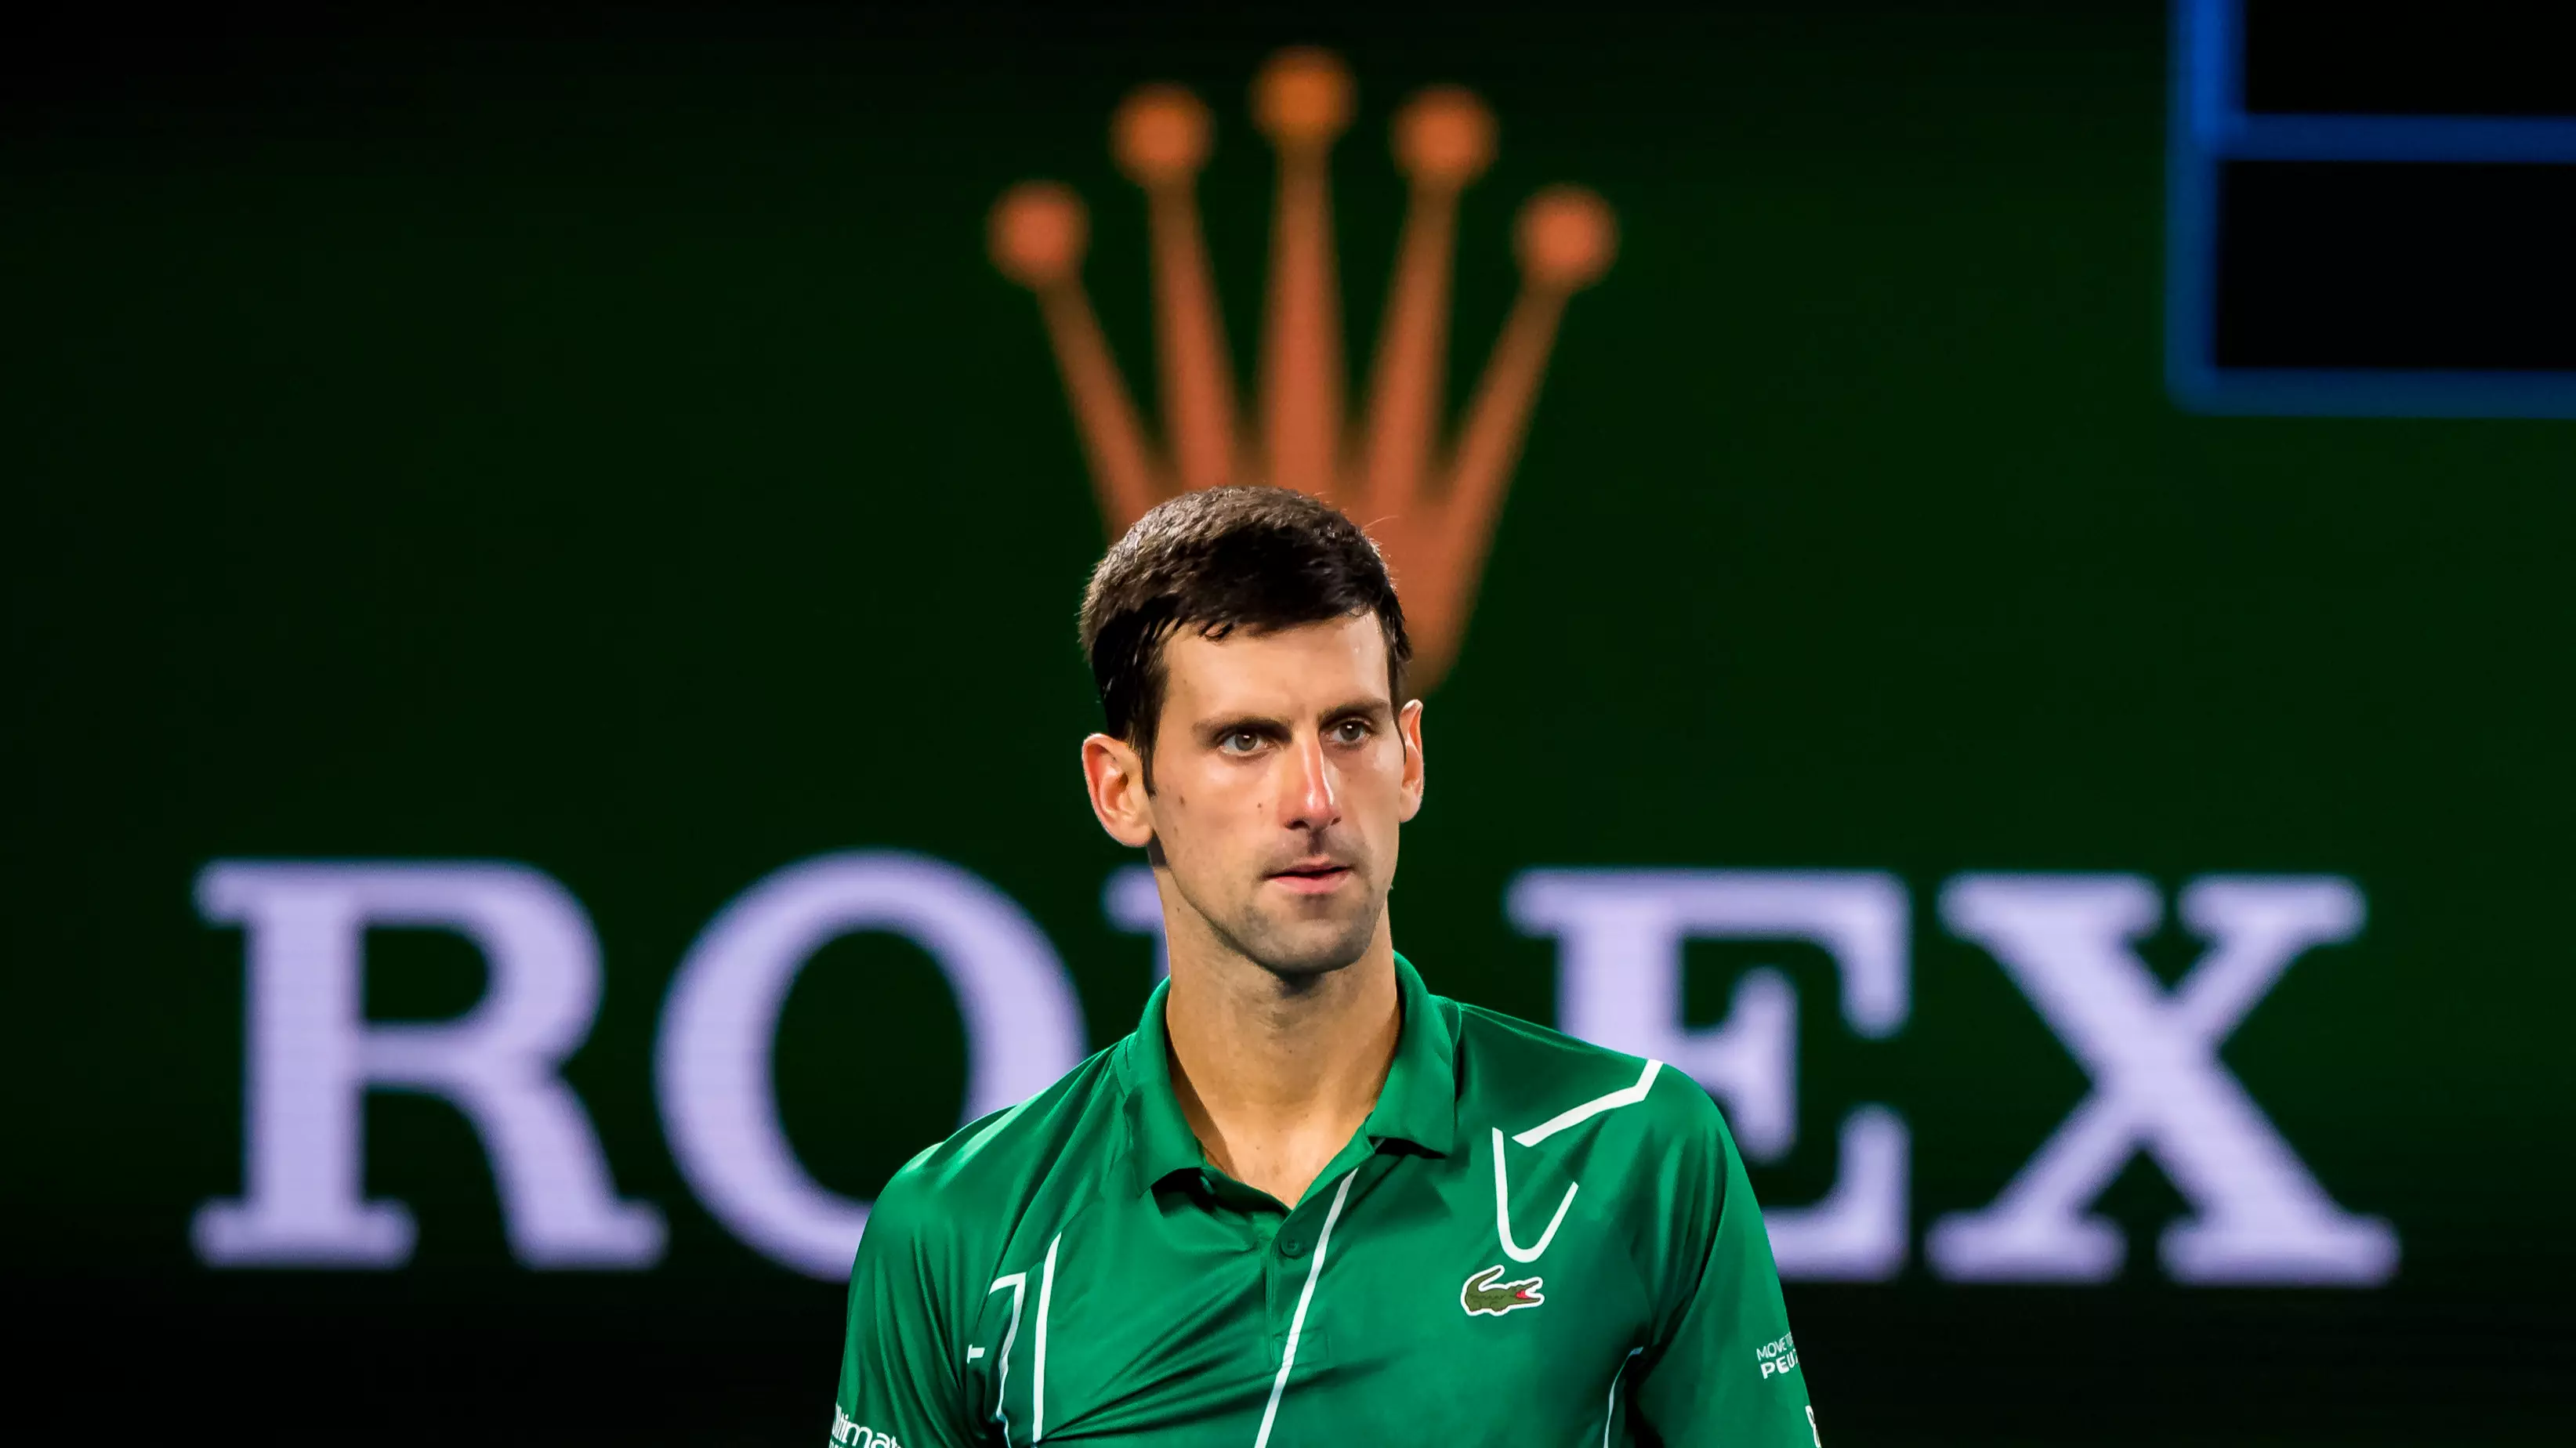 Novak Djokovic Pens Open Letter To Australian Public Saying He Has 'Earned His Privileges'